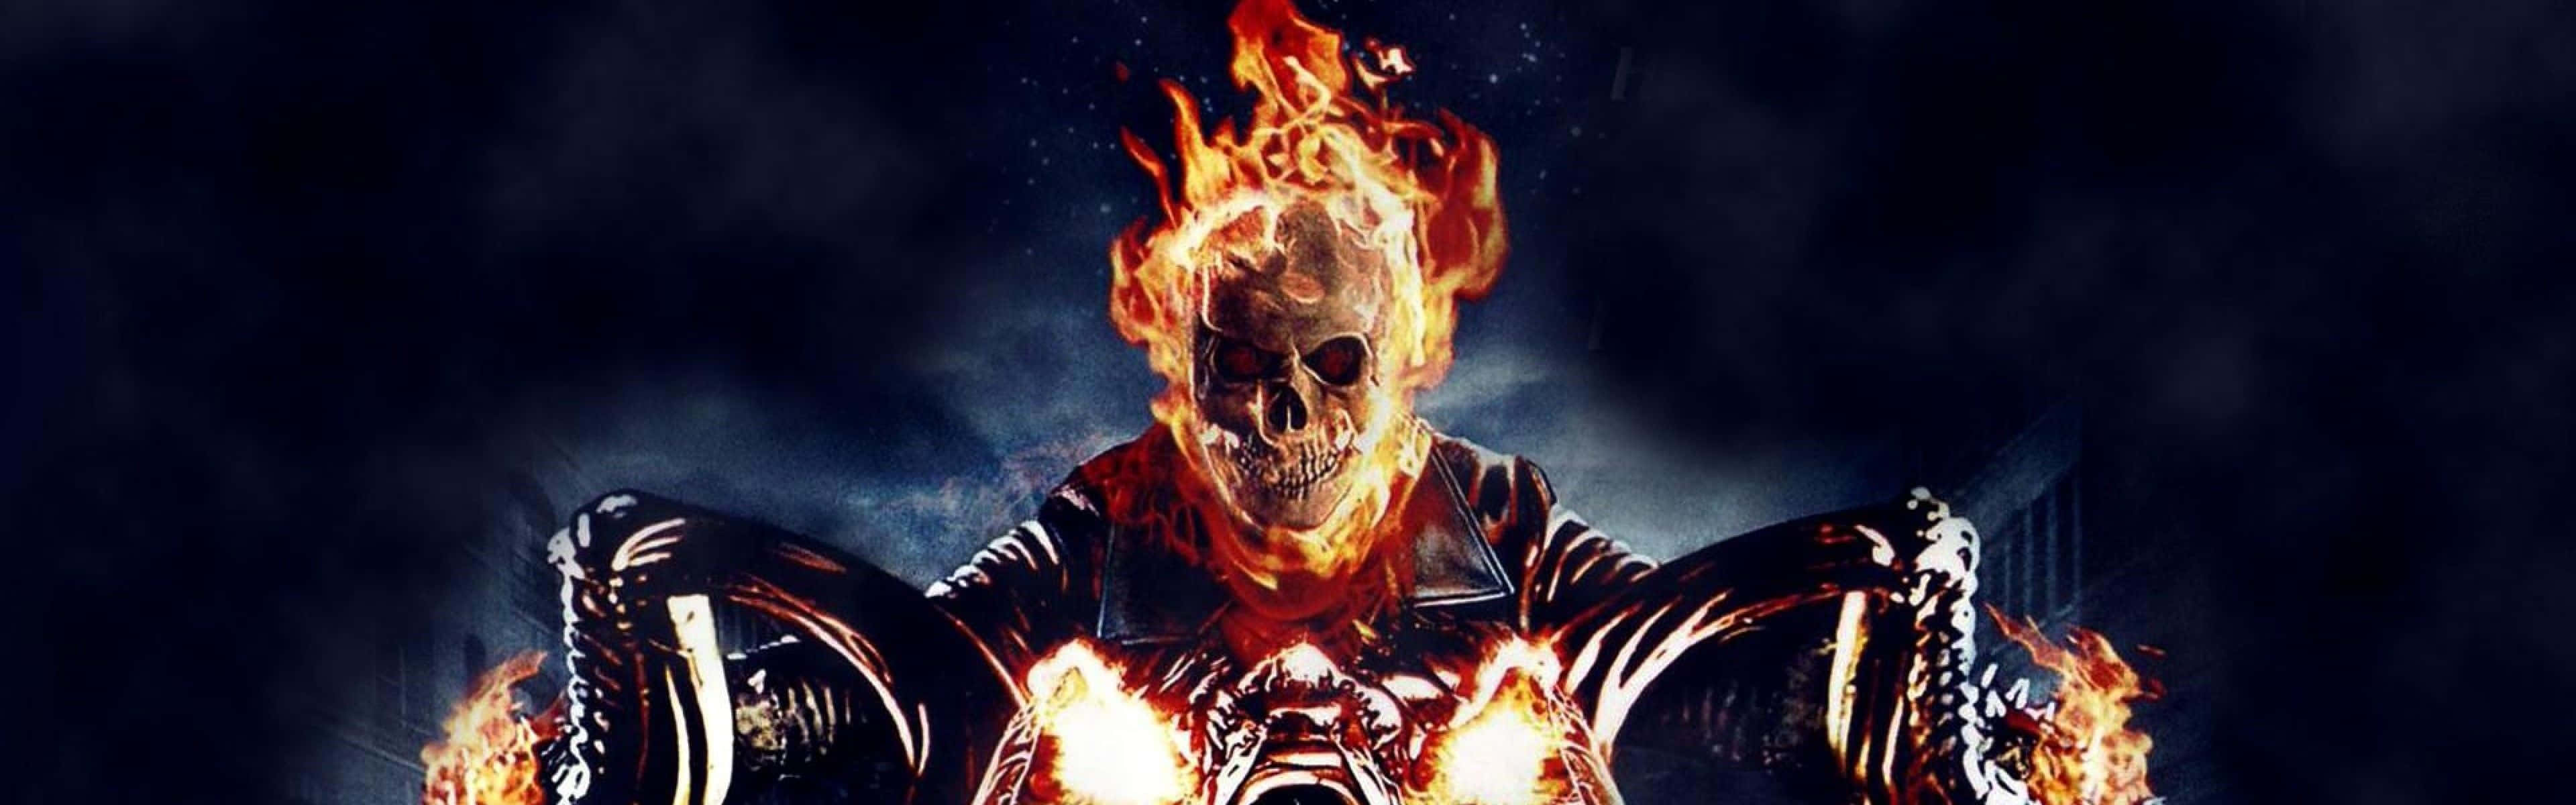 Angry Fire Skull Wallpaper